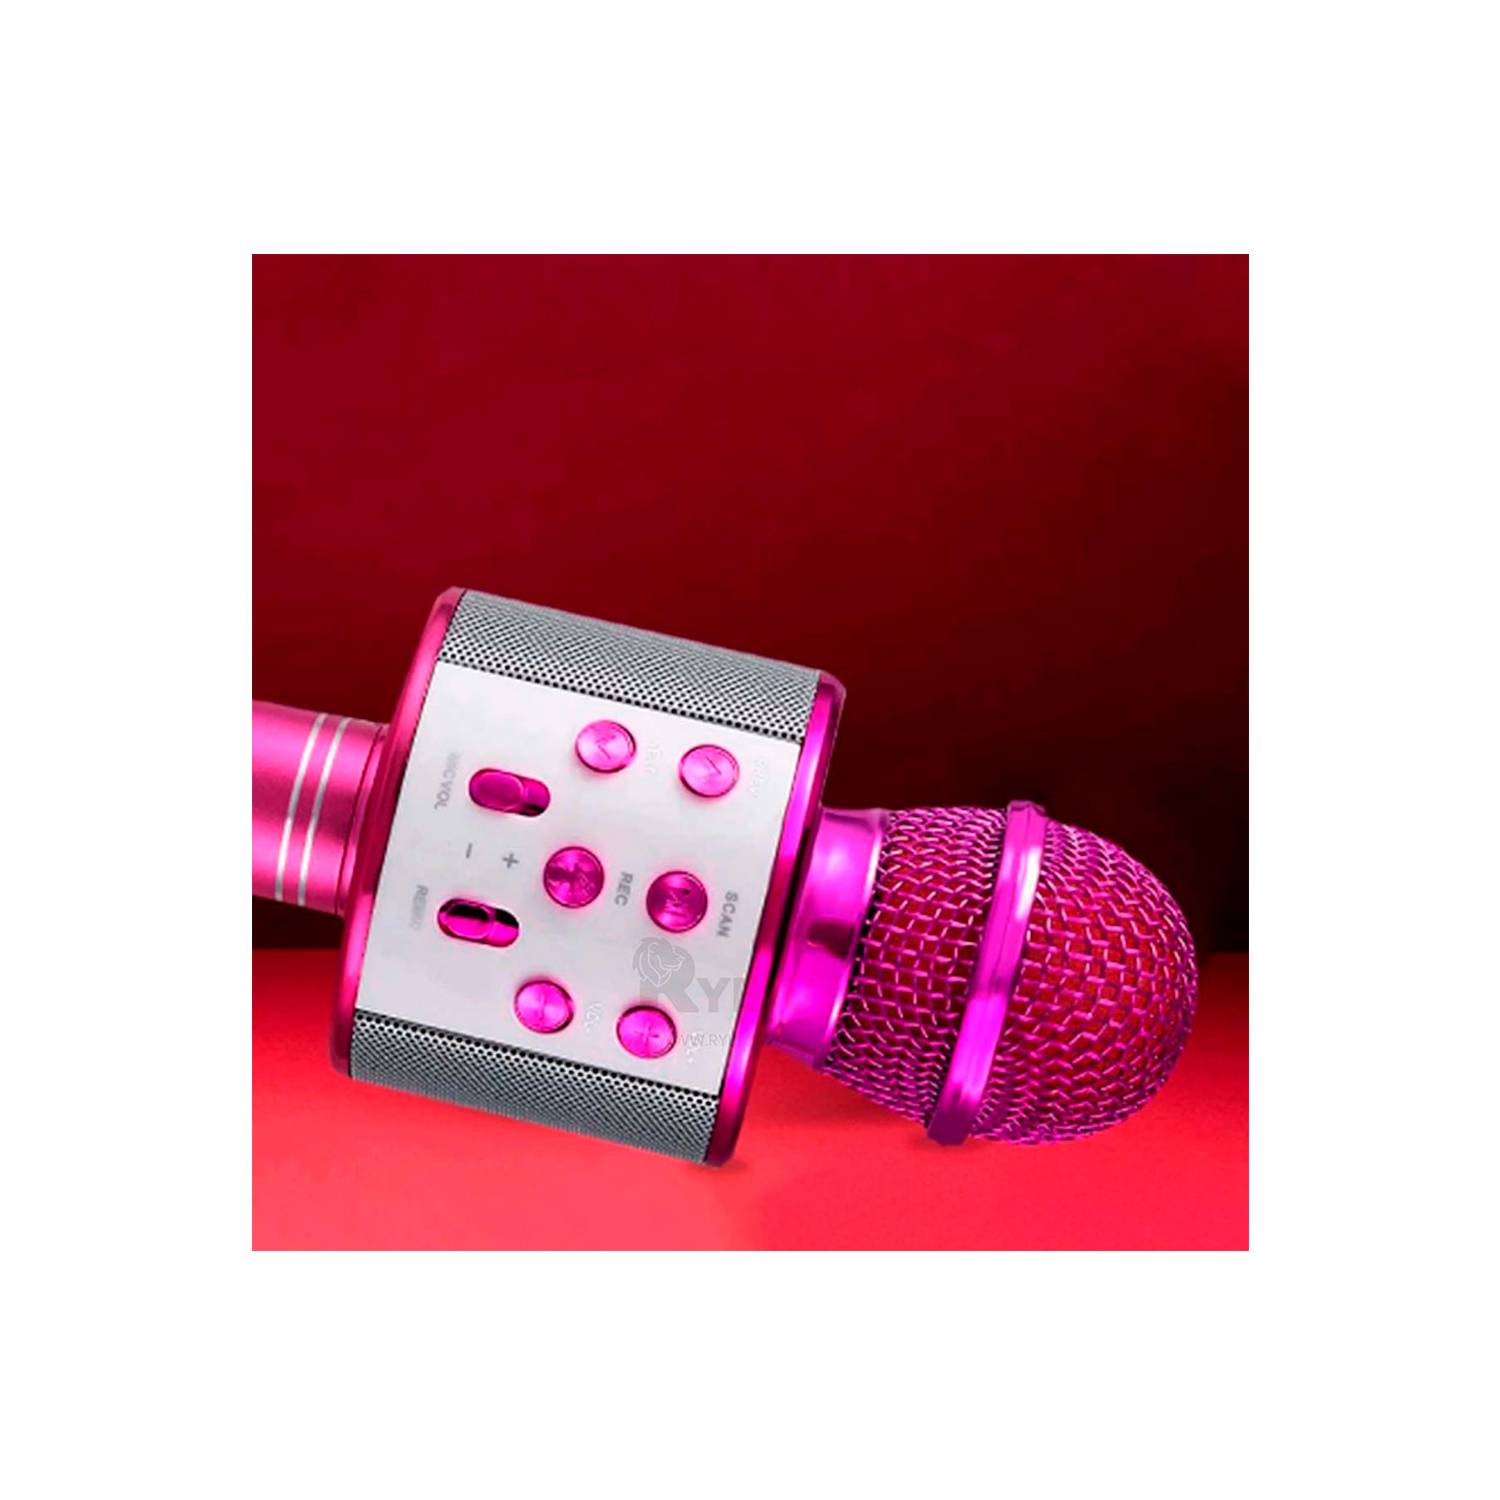 Microfono Inalambrico Bluetooth de Color Fucsia RYBIU IMPORT